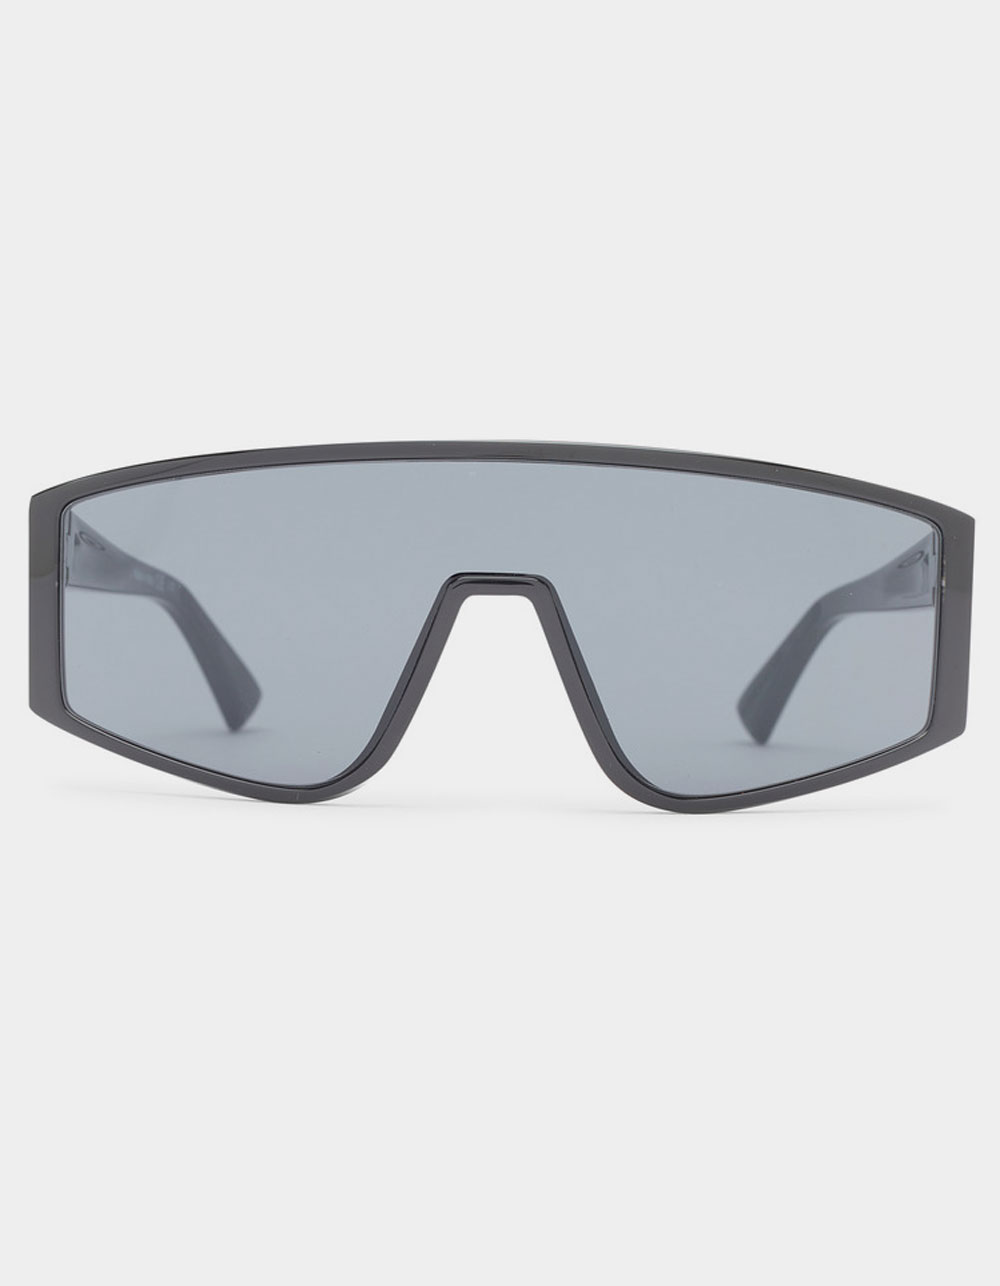 VONZIPPER Hyperbang Sunglasses - GRAY/BLACK | Tillys